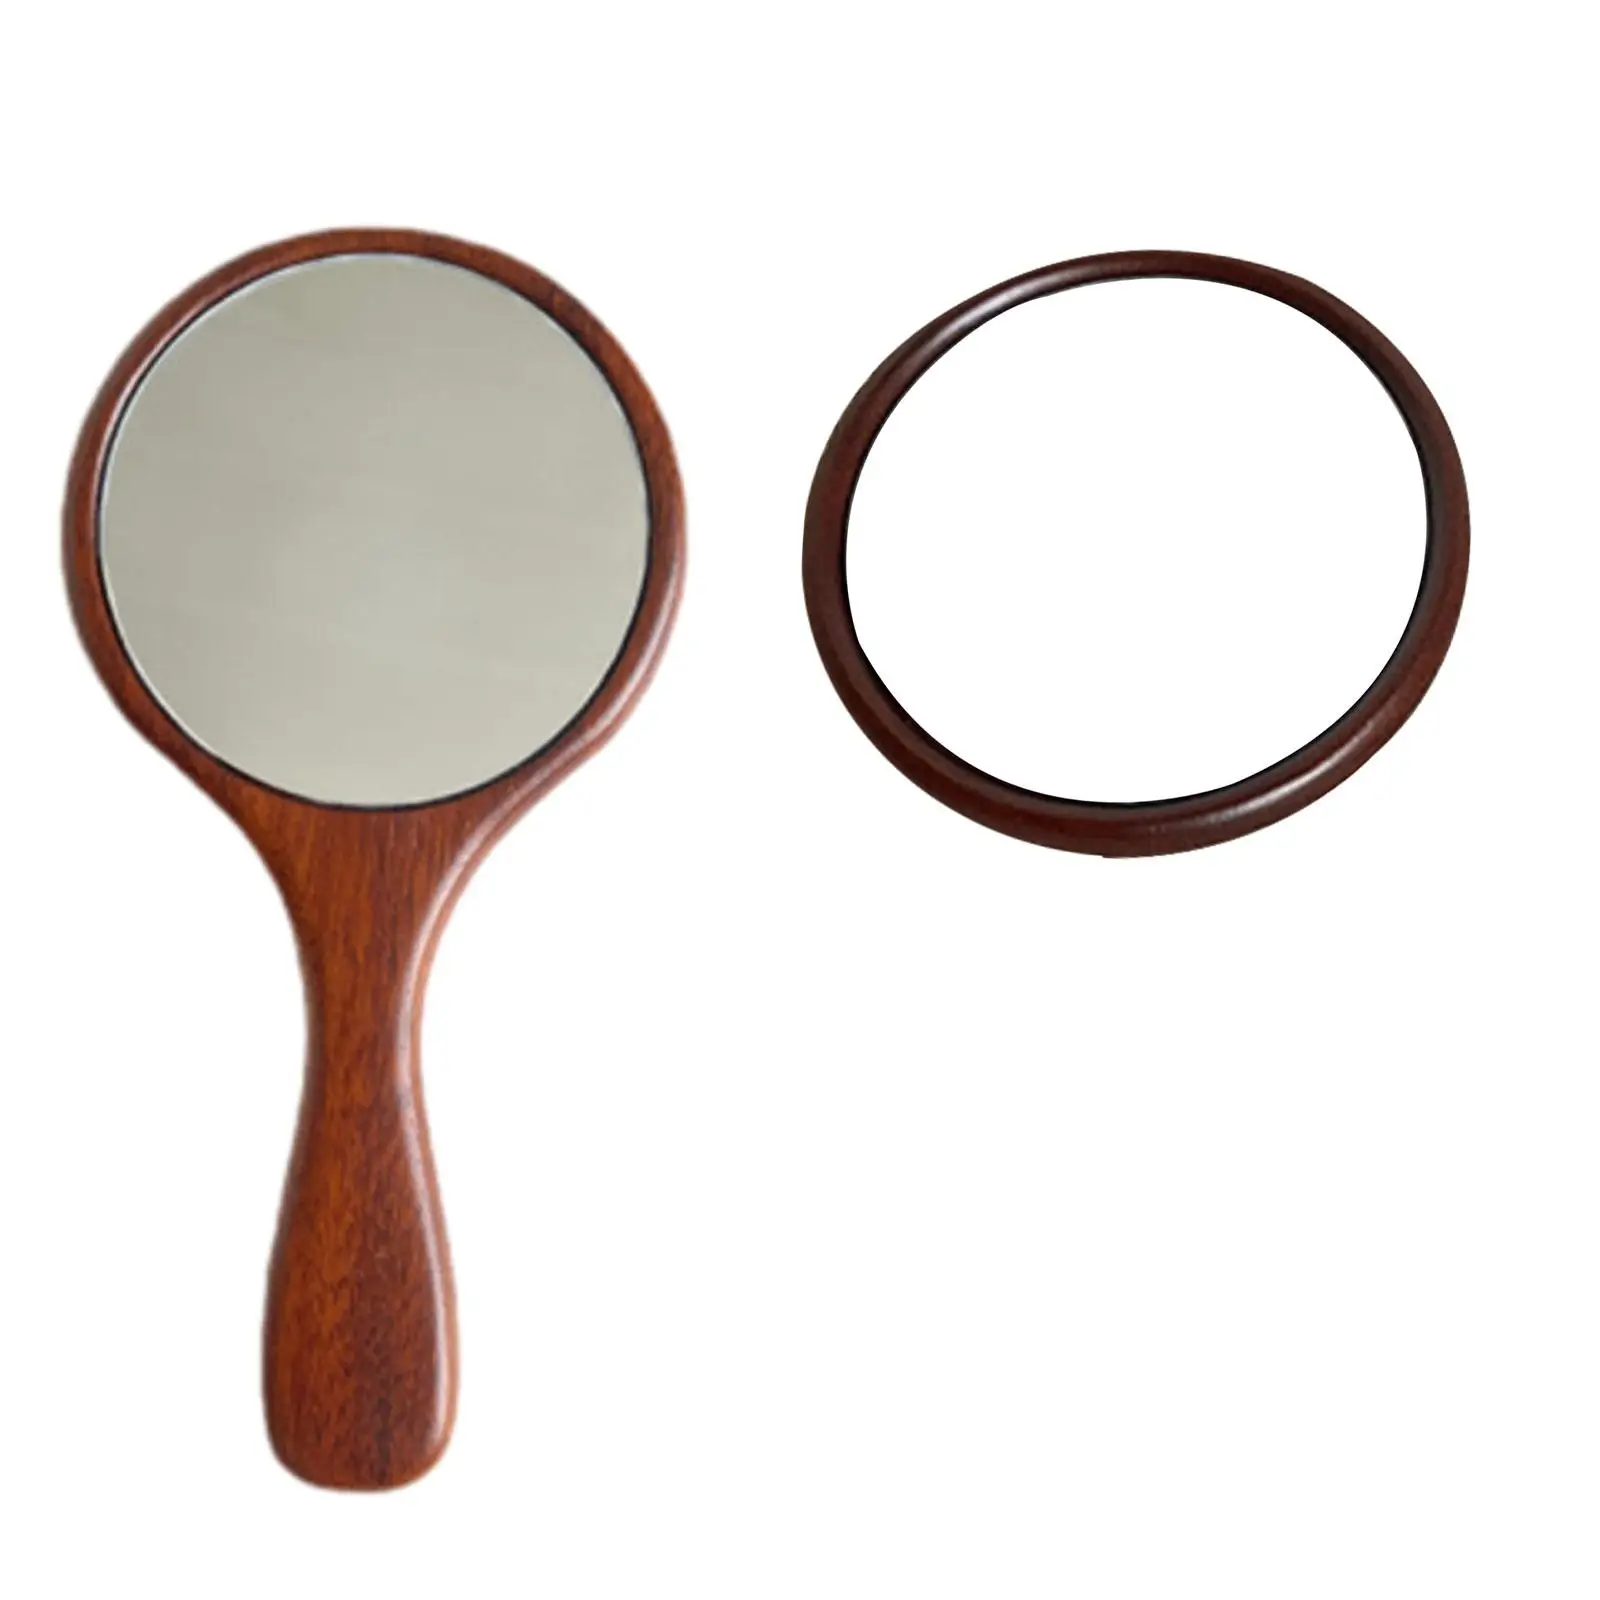 Small Makeup Mirror Wooden Decorative Salon Hairdresser Plain Mirror Handheld Mirror for Dressing Table Barbers Desk Bedroom